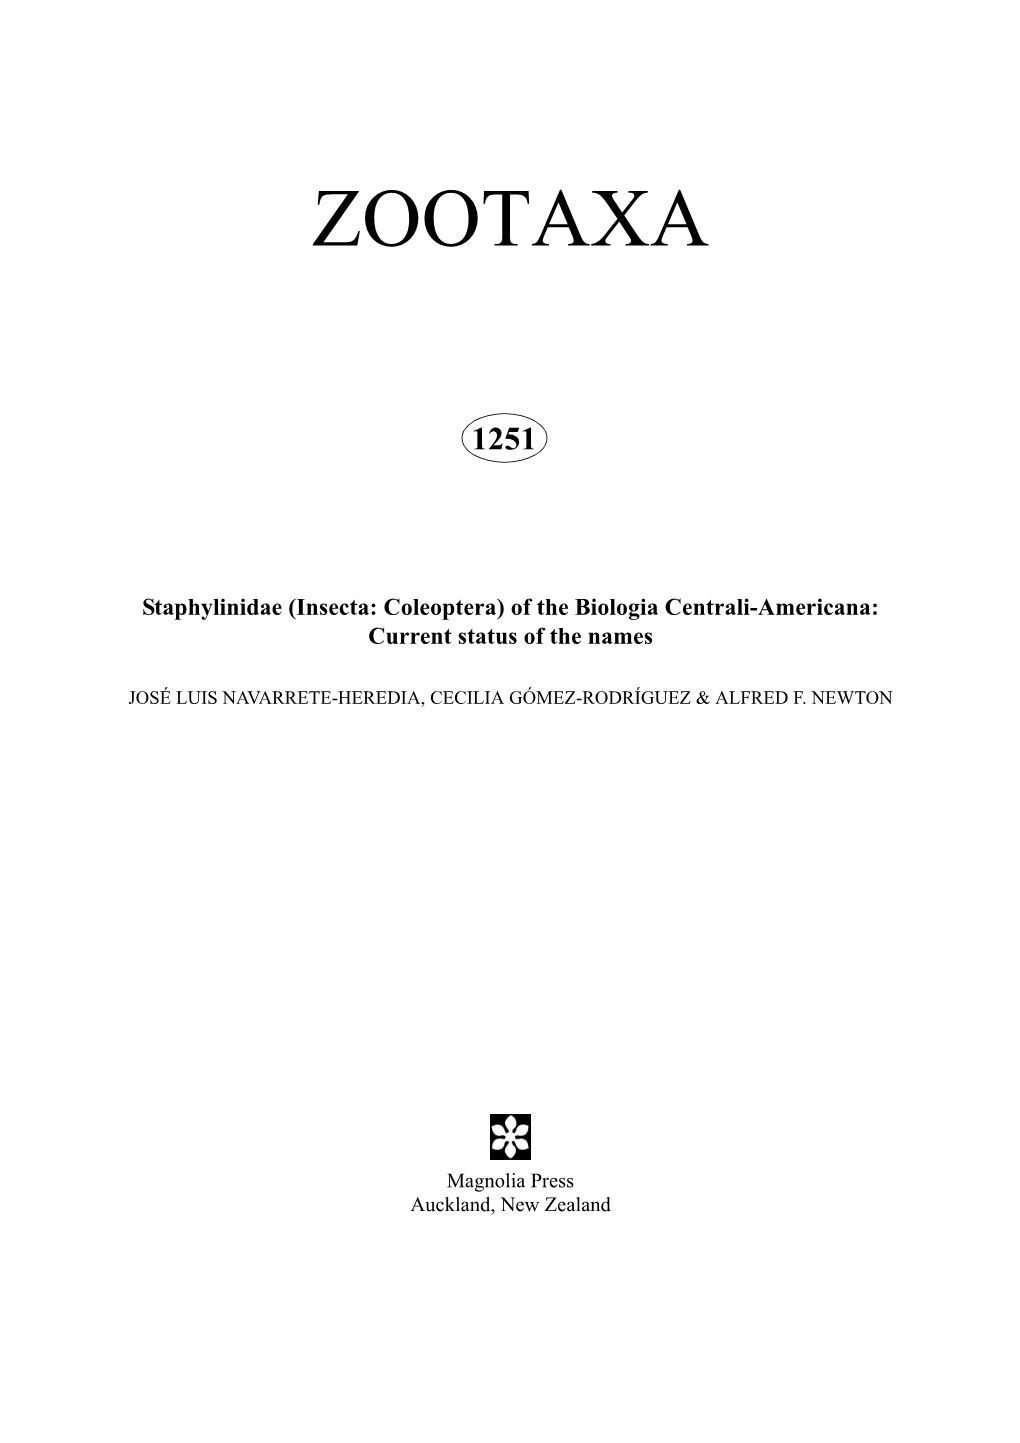 Zootaxa, Staphylinidae